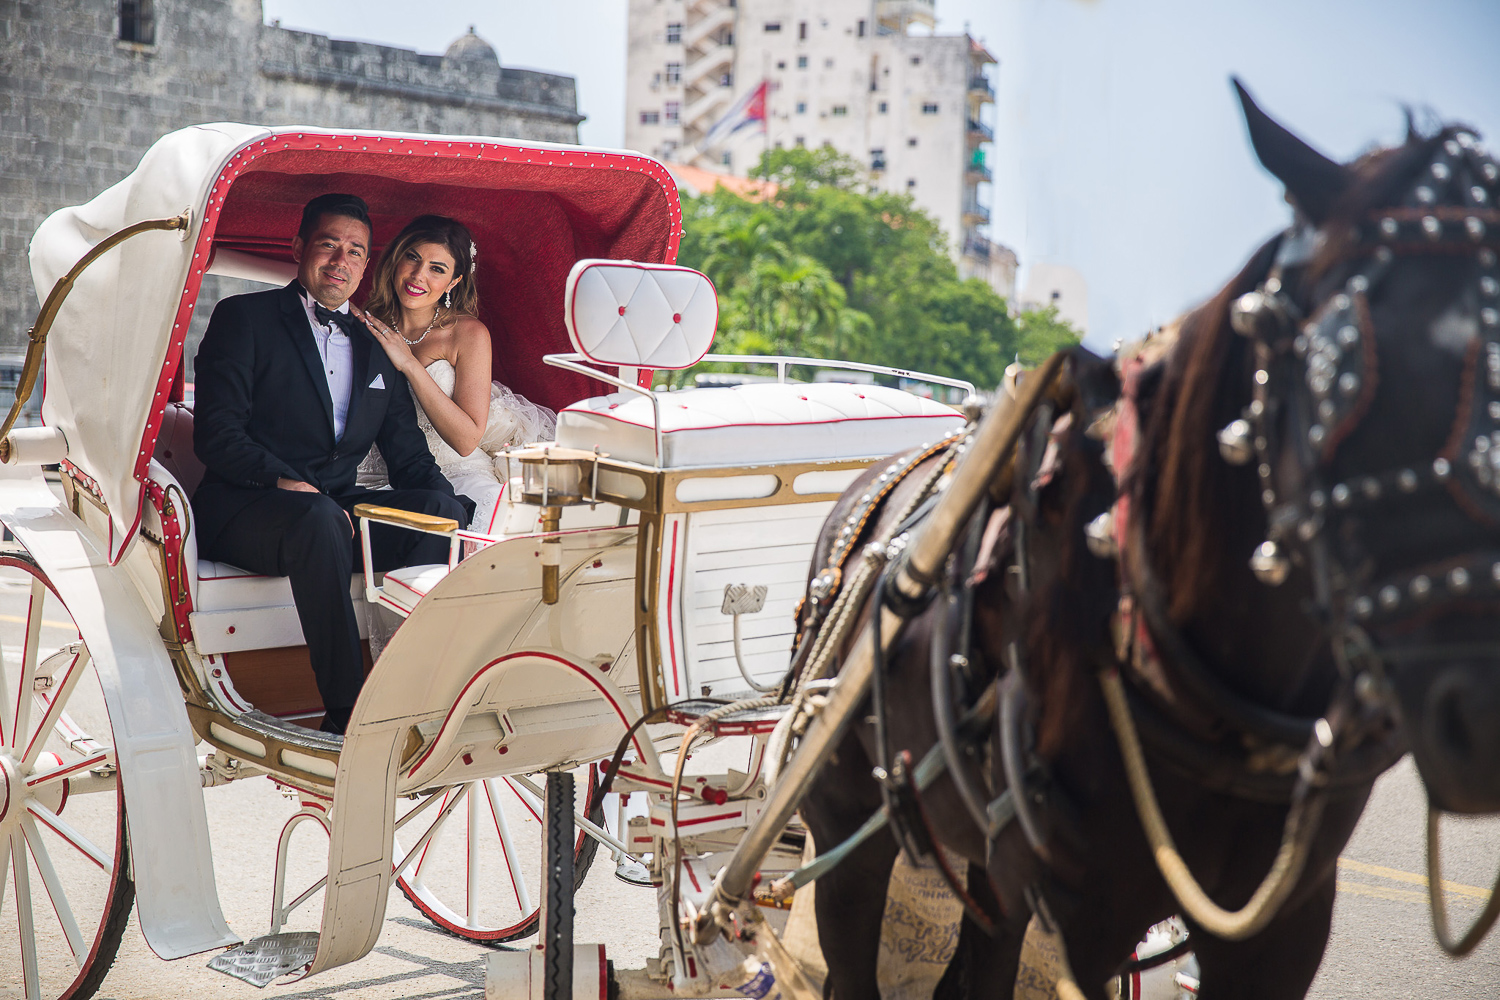 Havana Cuba Destination Wedding Shoot